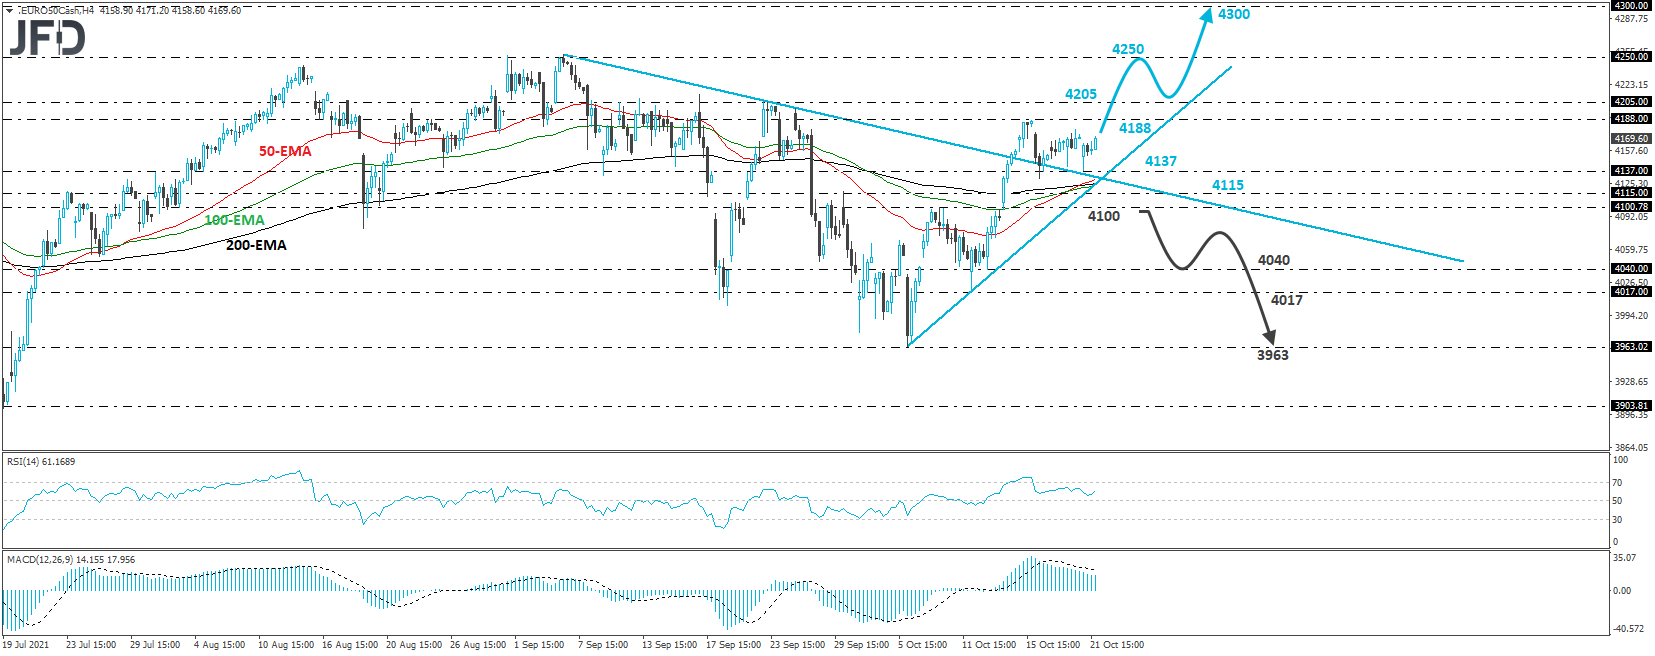 Euro Stoxx 50 cash index 4-hour chart technical analysis.